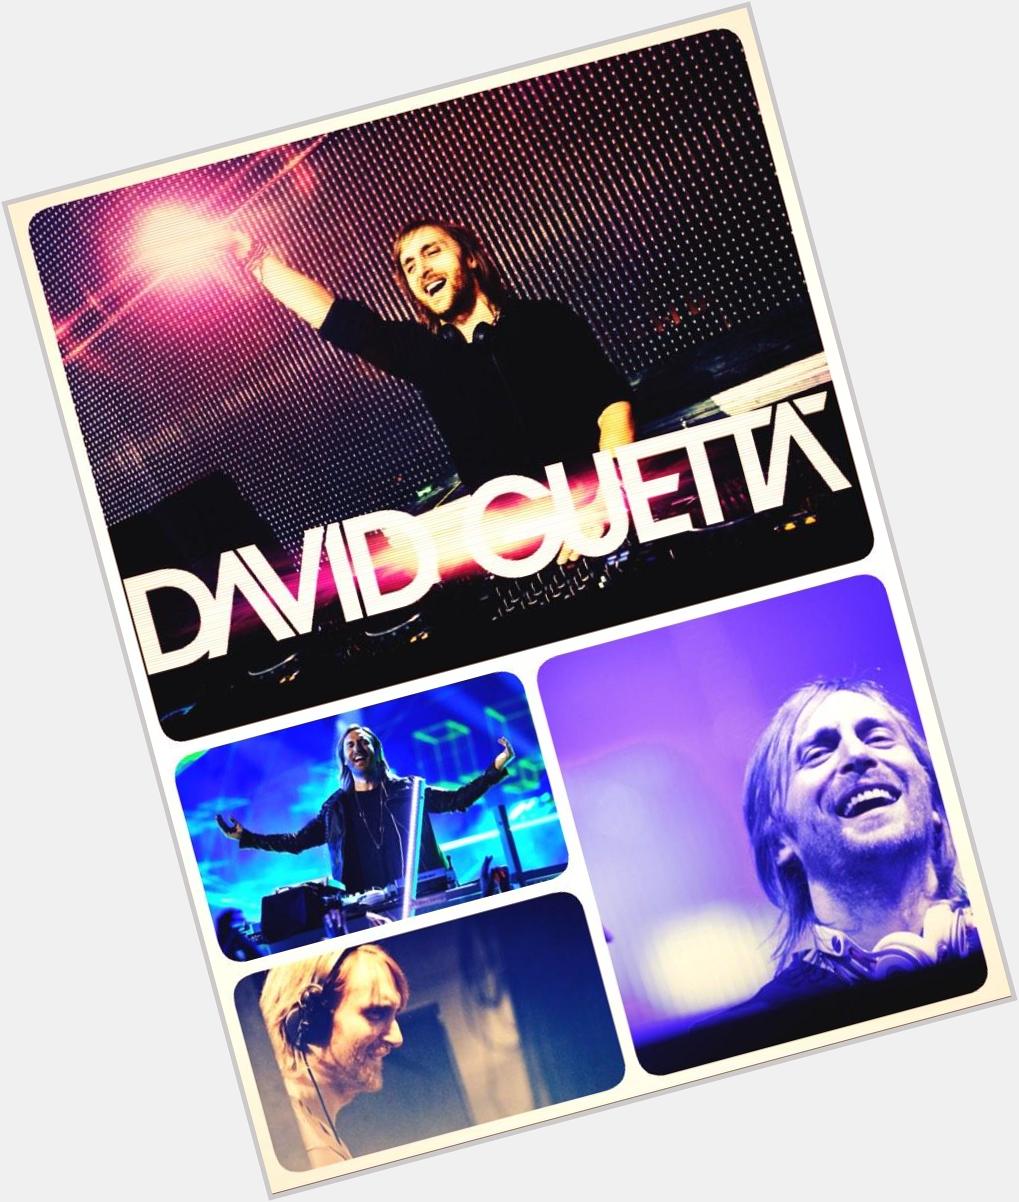 Happy birthday David Guetta   